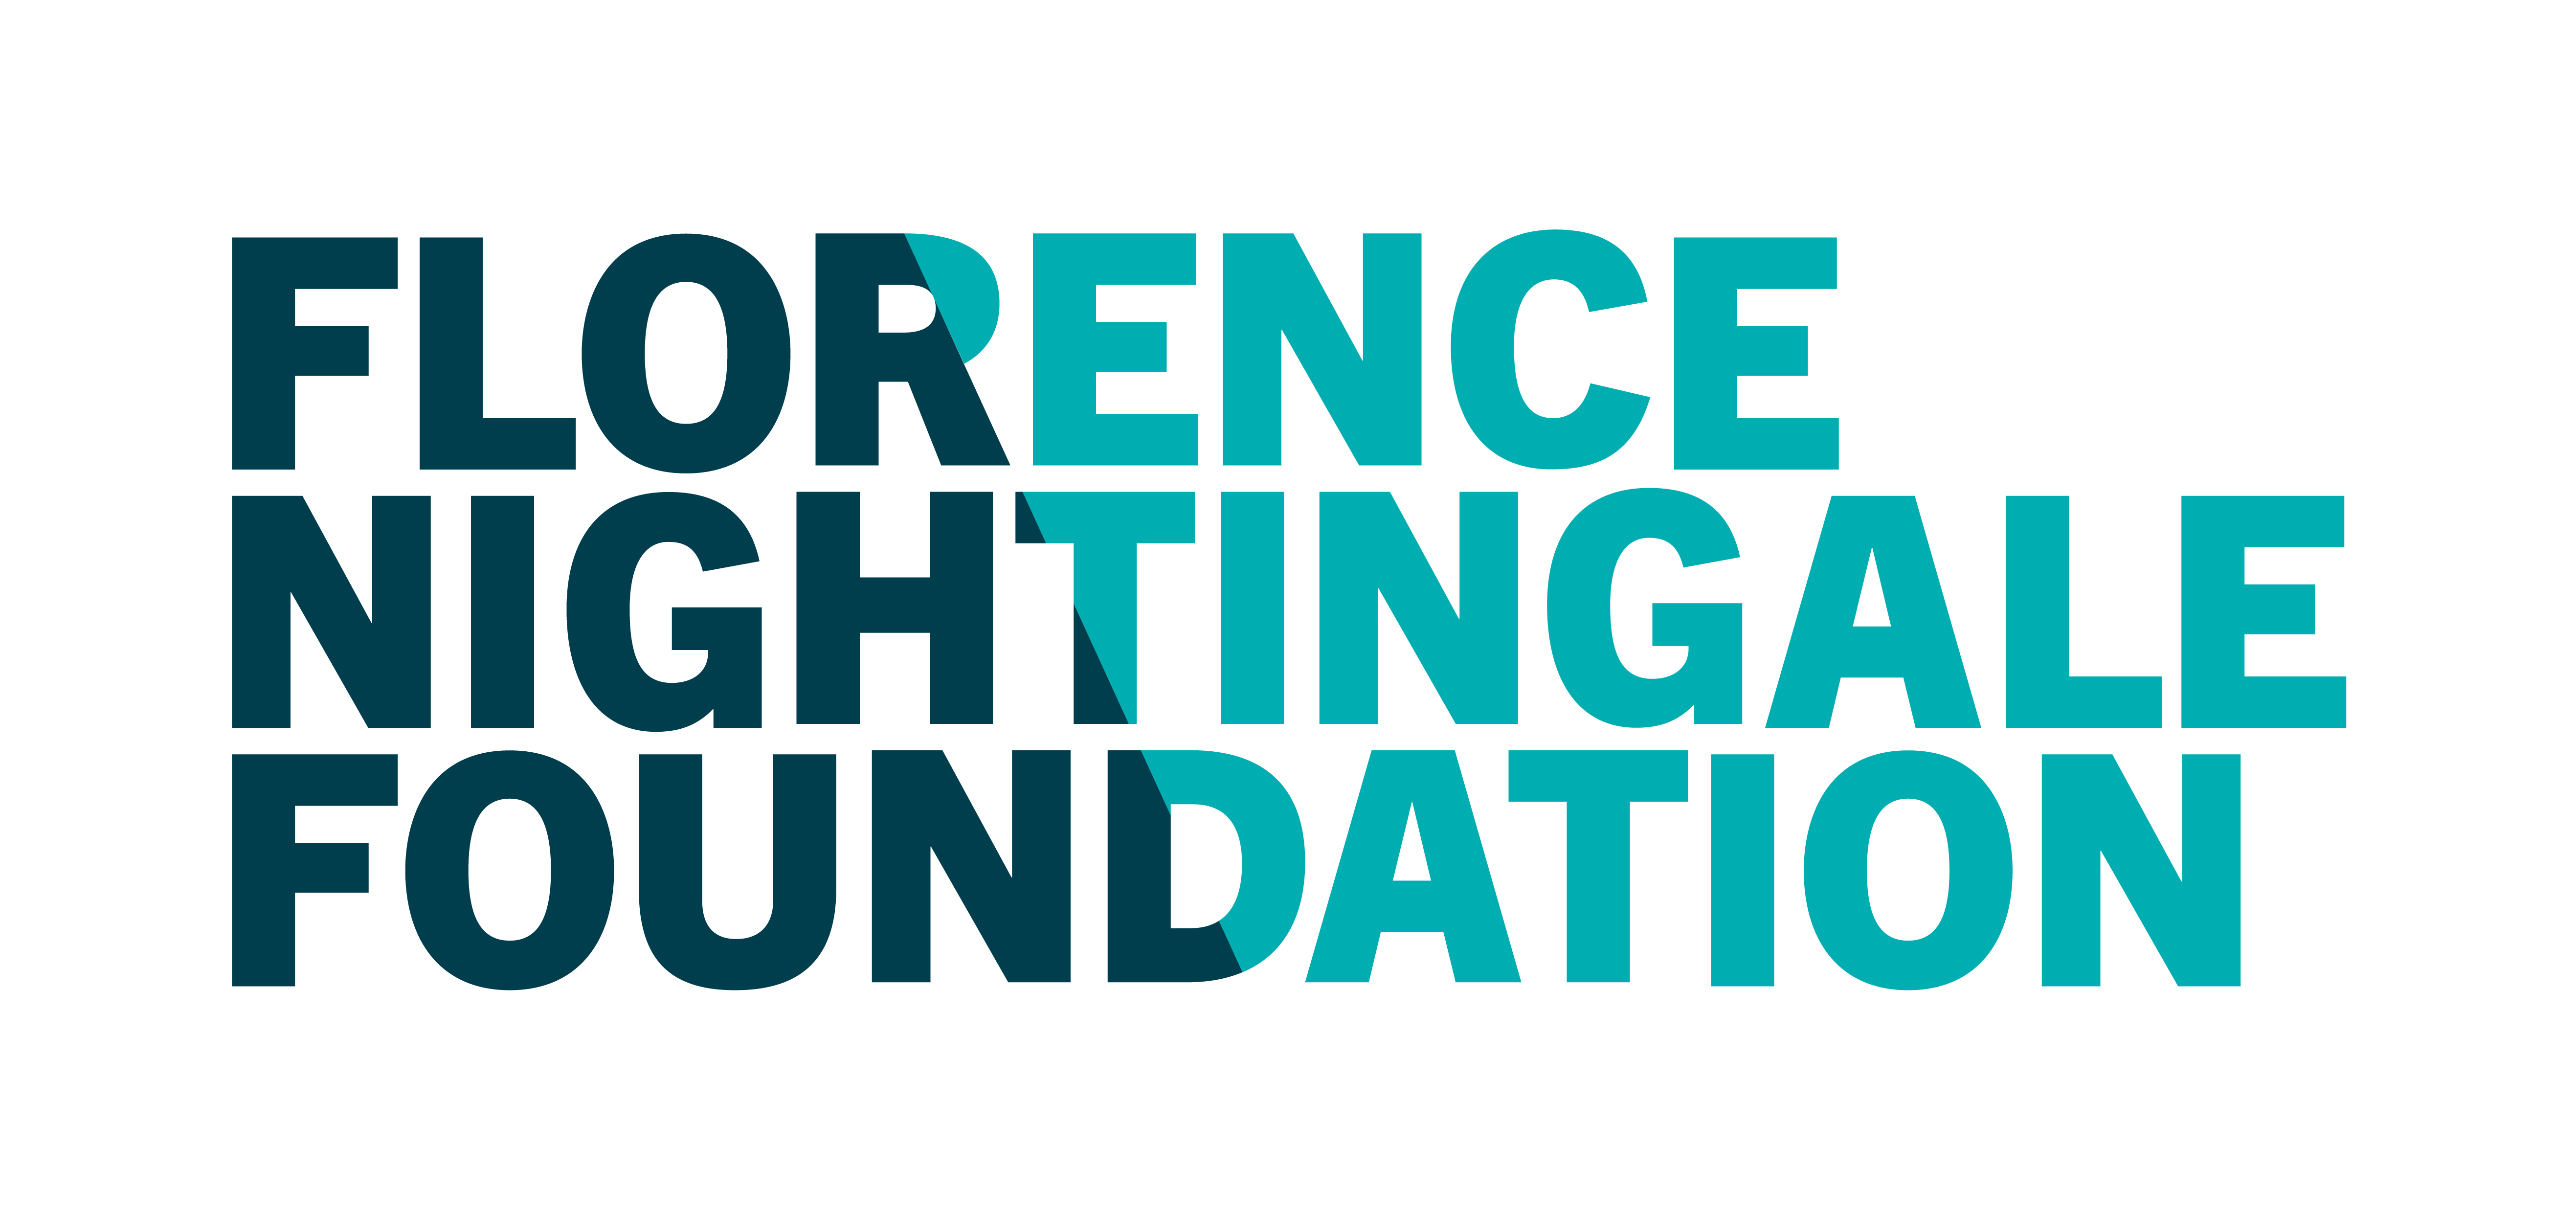 The logo of the Florence Nightingale Foundation